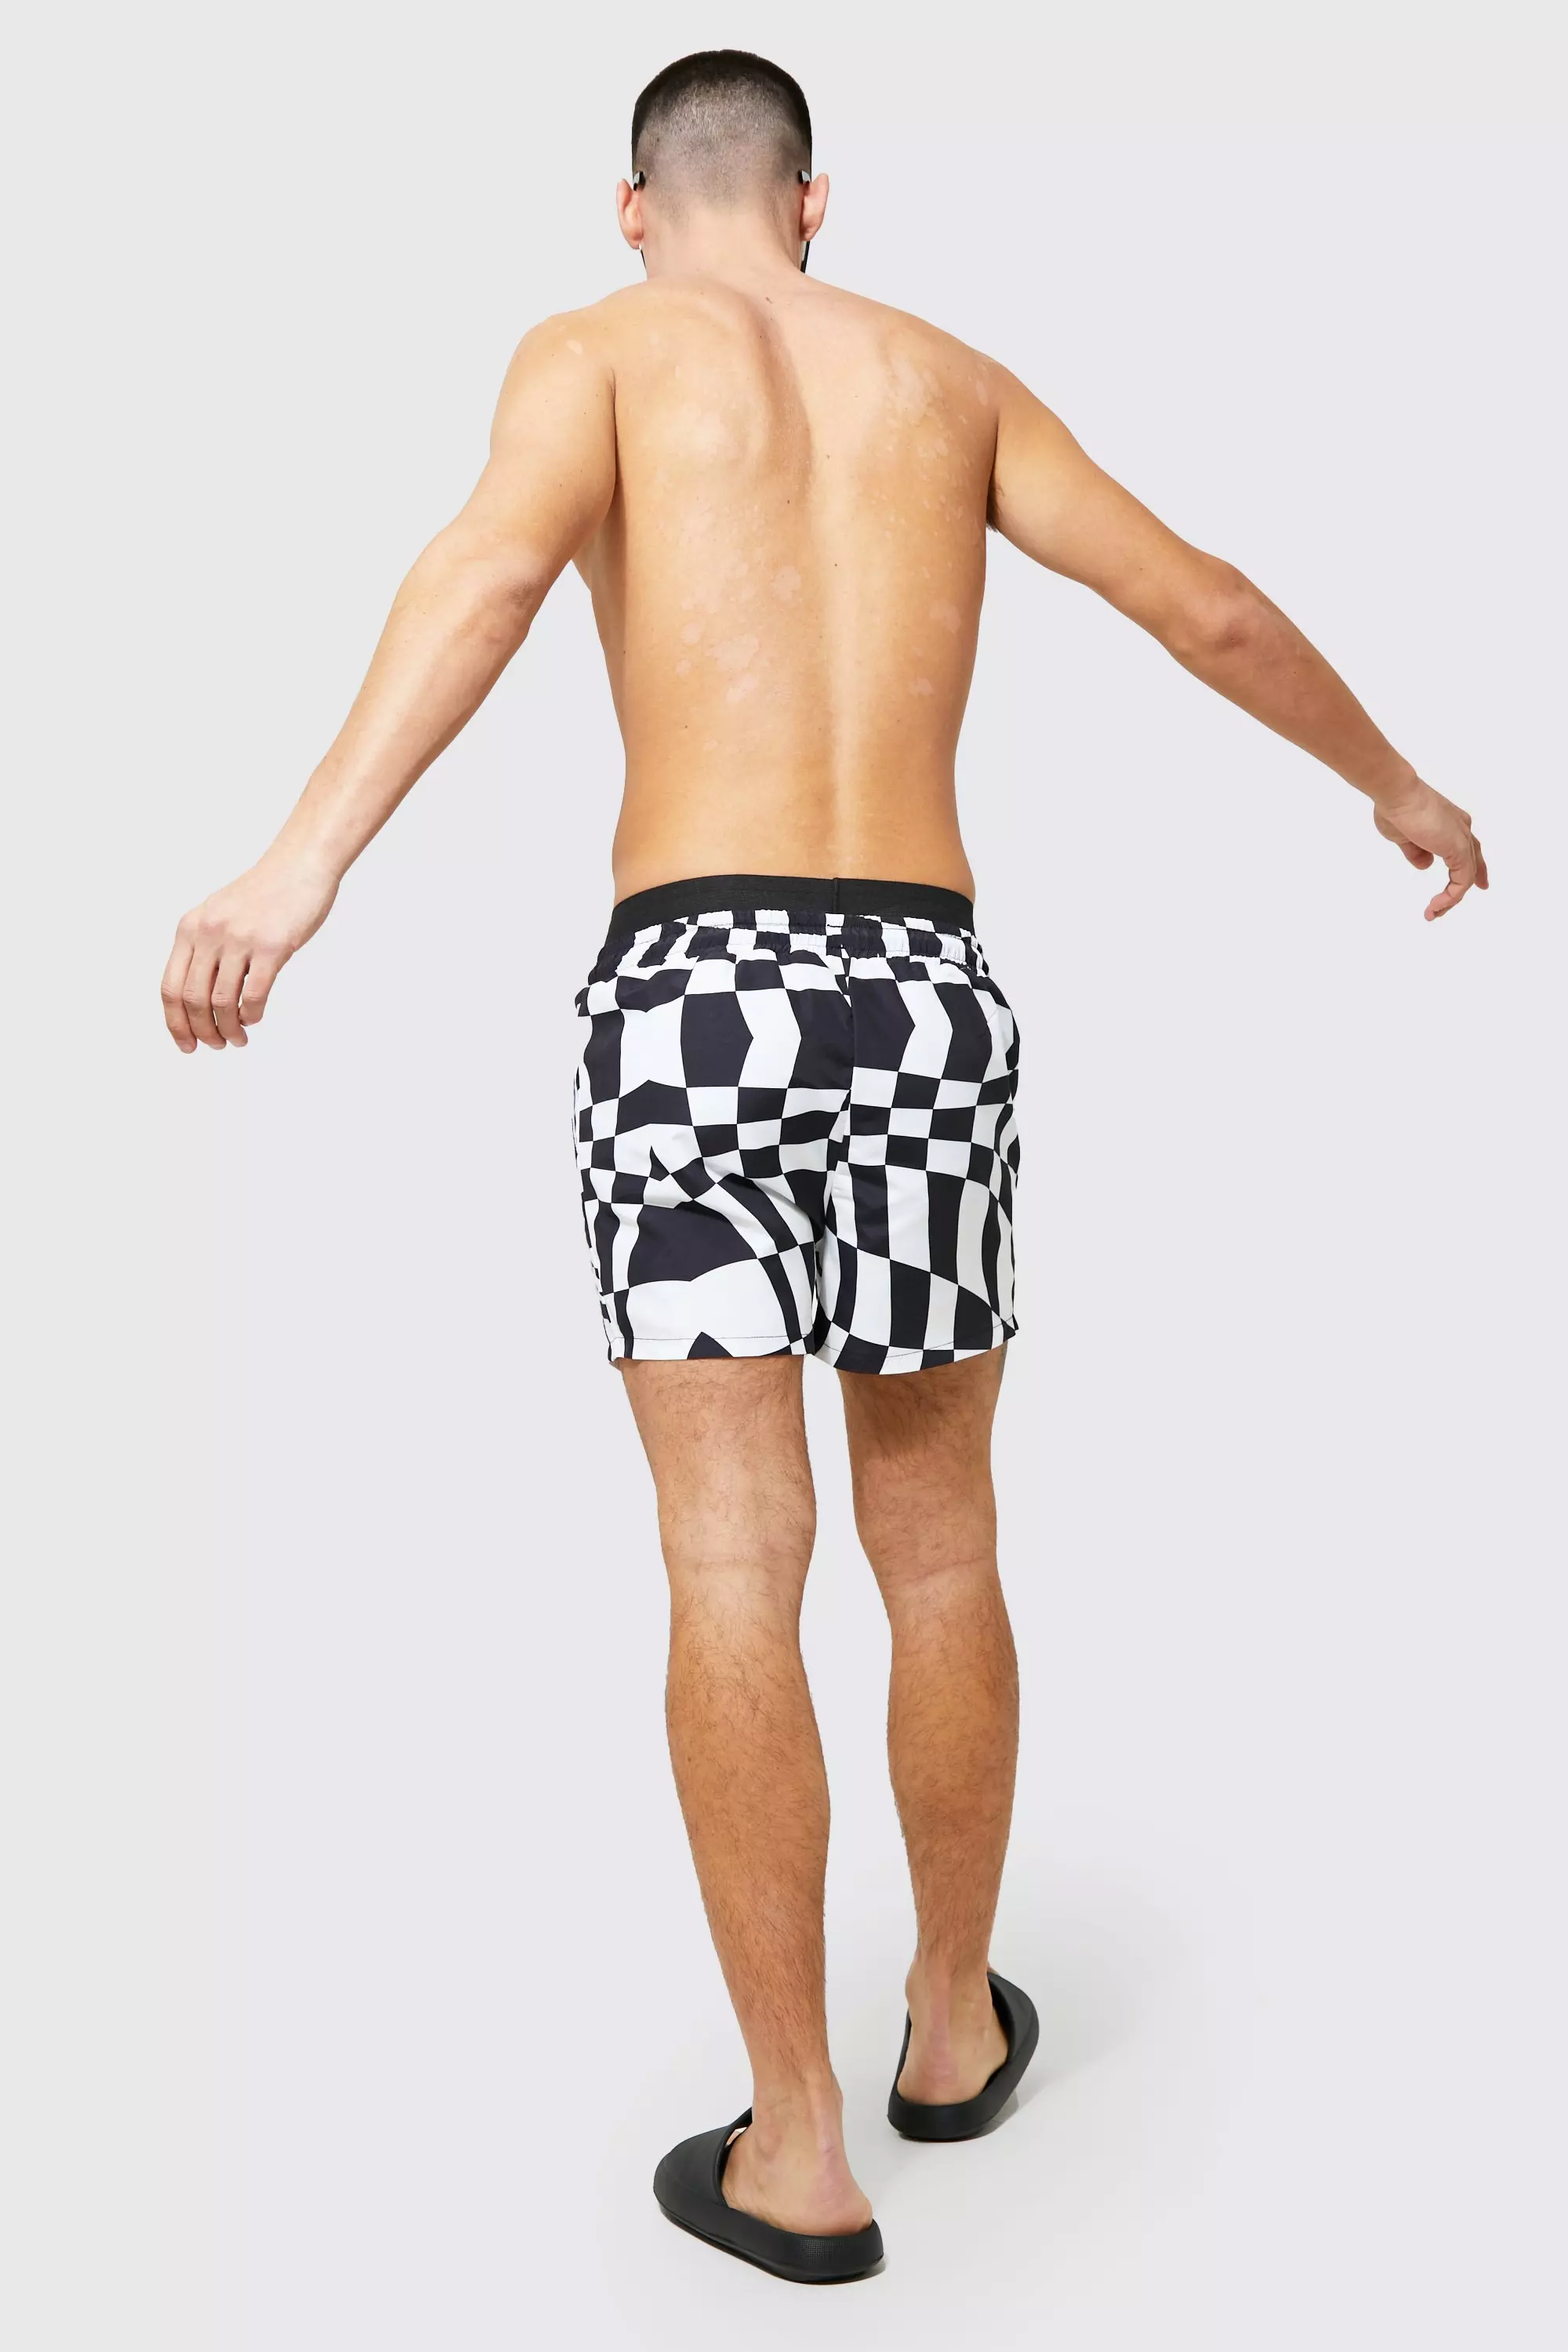 BAOHOKE Mens Casual Sports Shorts Beach Swimming Trunks Solid Gym Pants